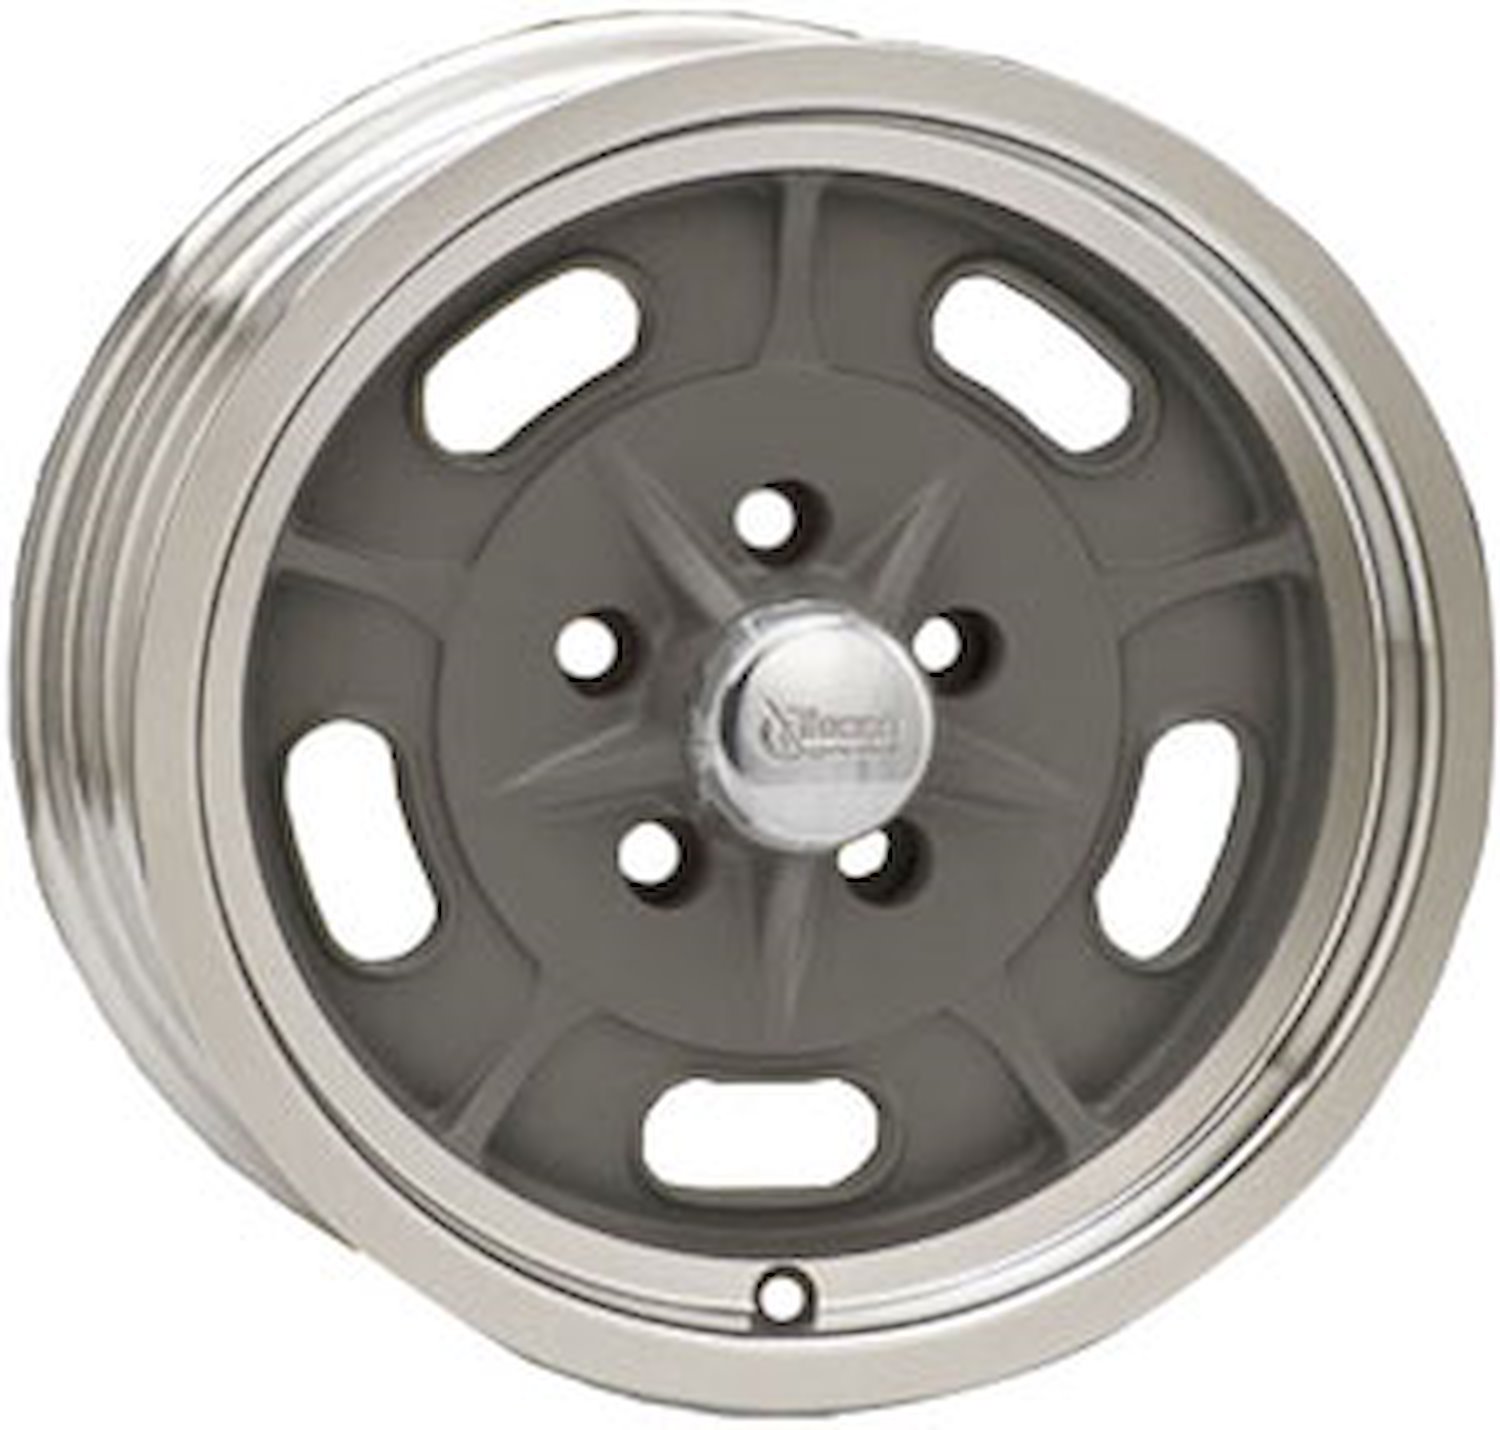 Igniter Wheel - Gray Size: 15" x 8"